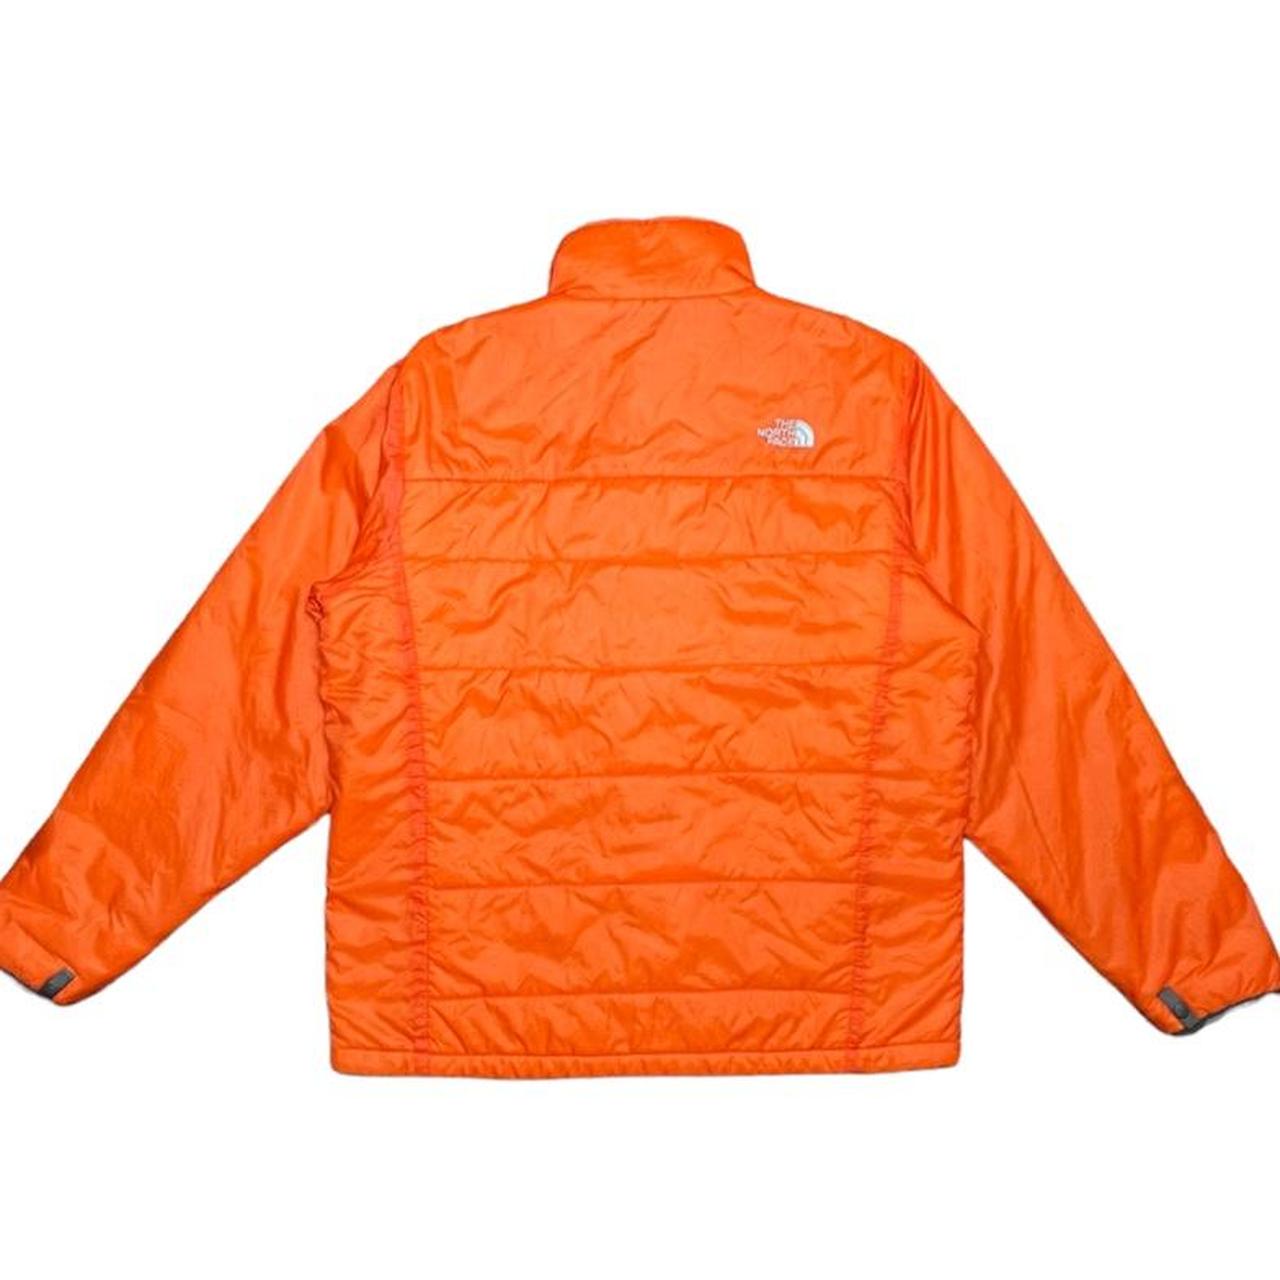 Orange The North Face Puffer Jacket - Lightweight... - Depop